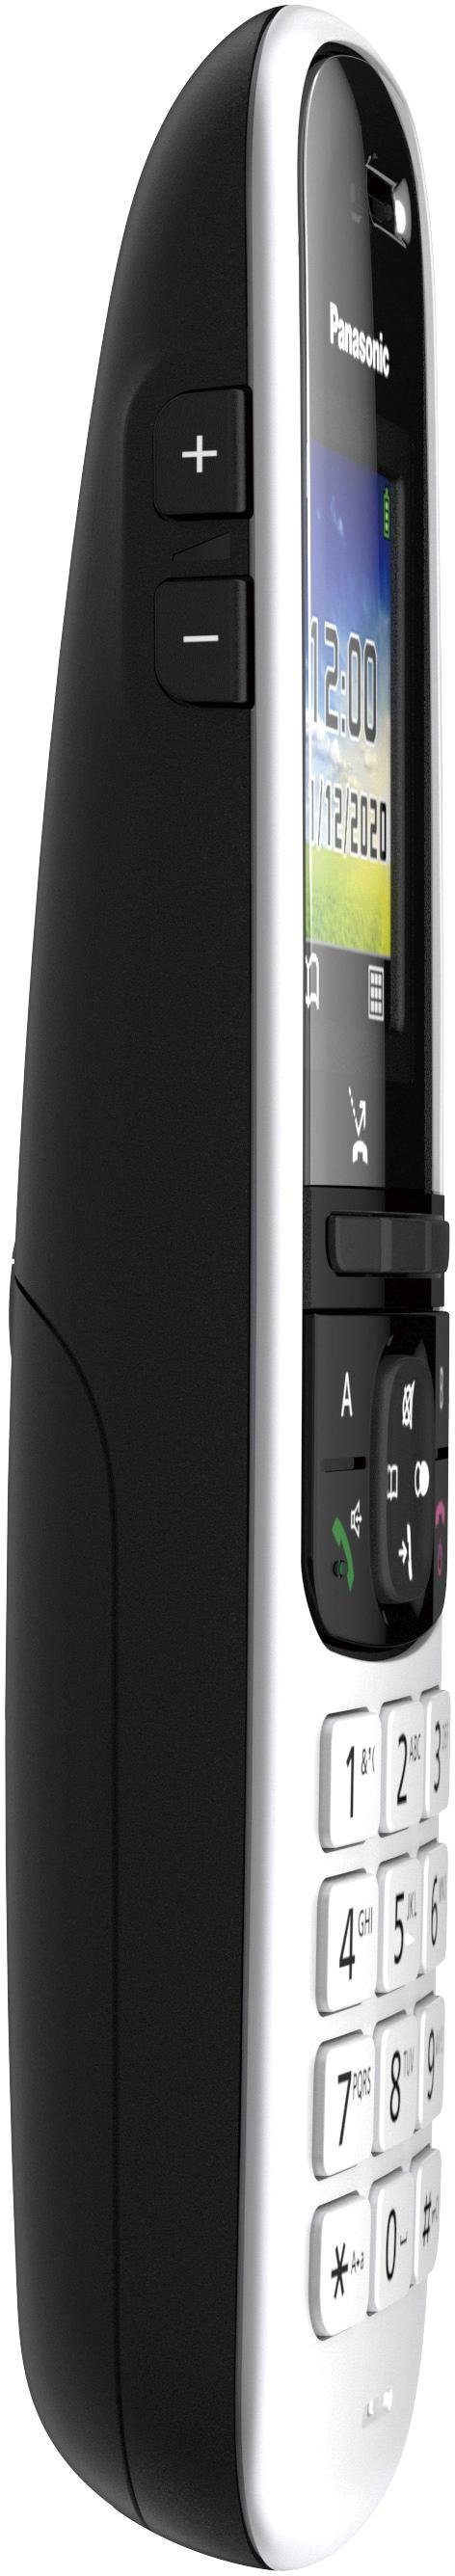 Panasonic KX-TGH710 1) DECT-Telefon schwarz (Mobilteile: Schnurloses